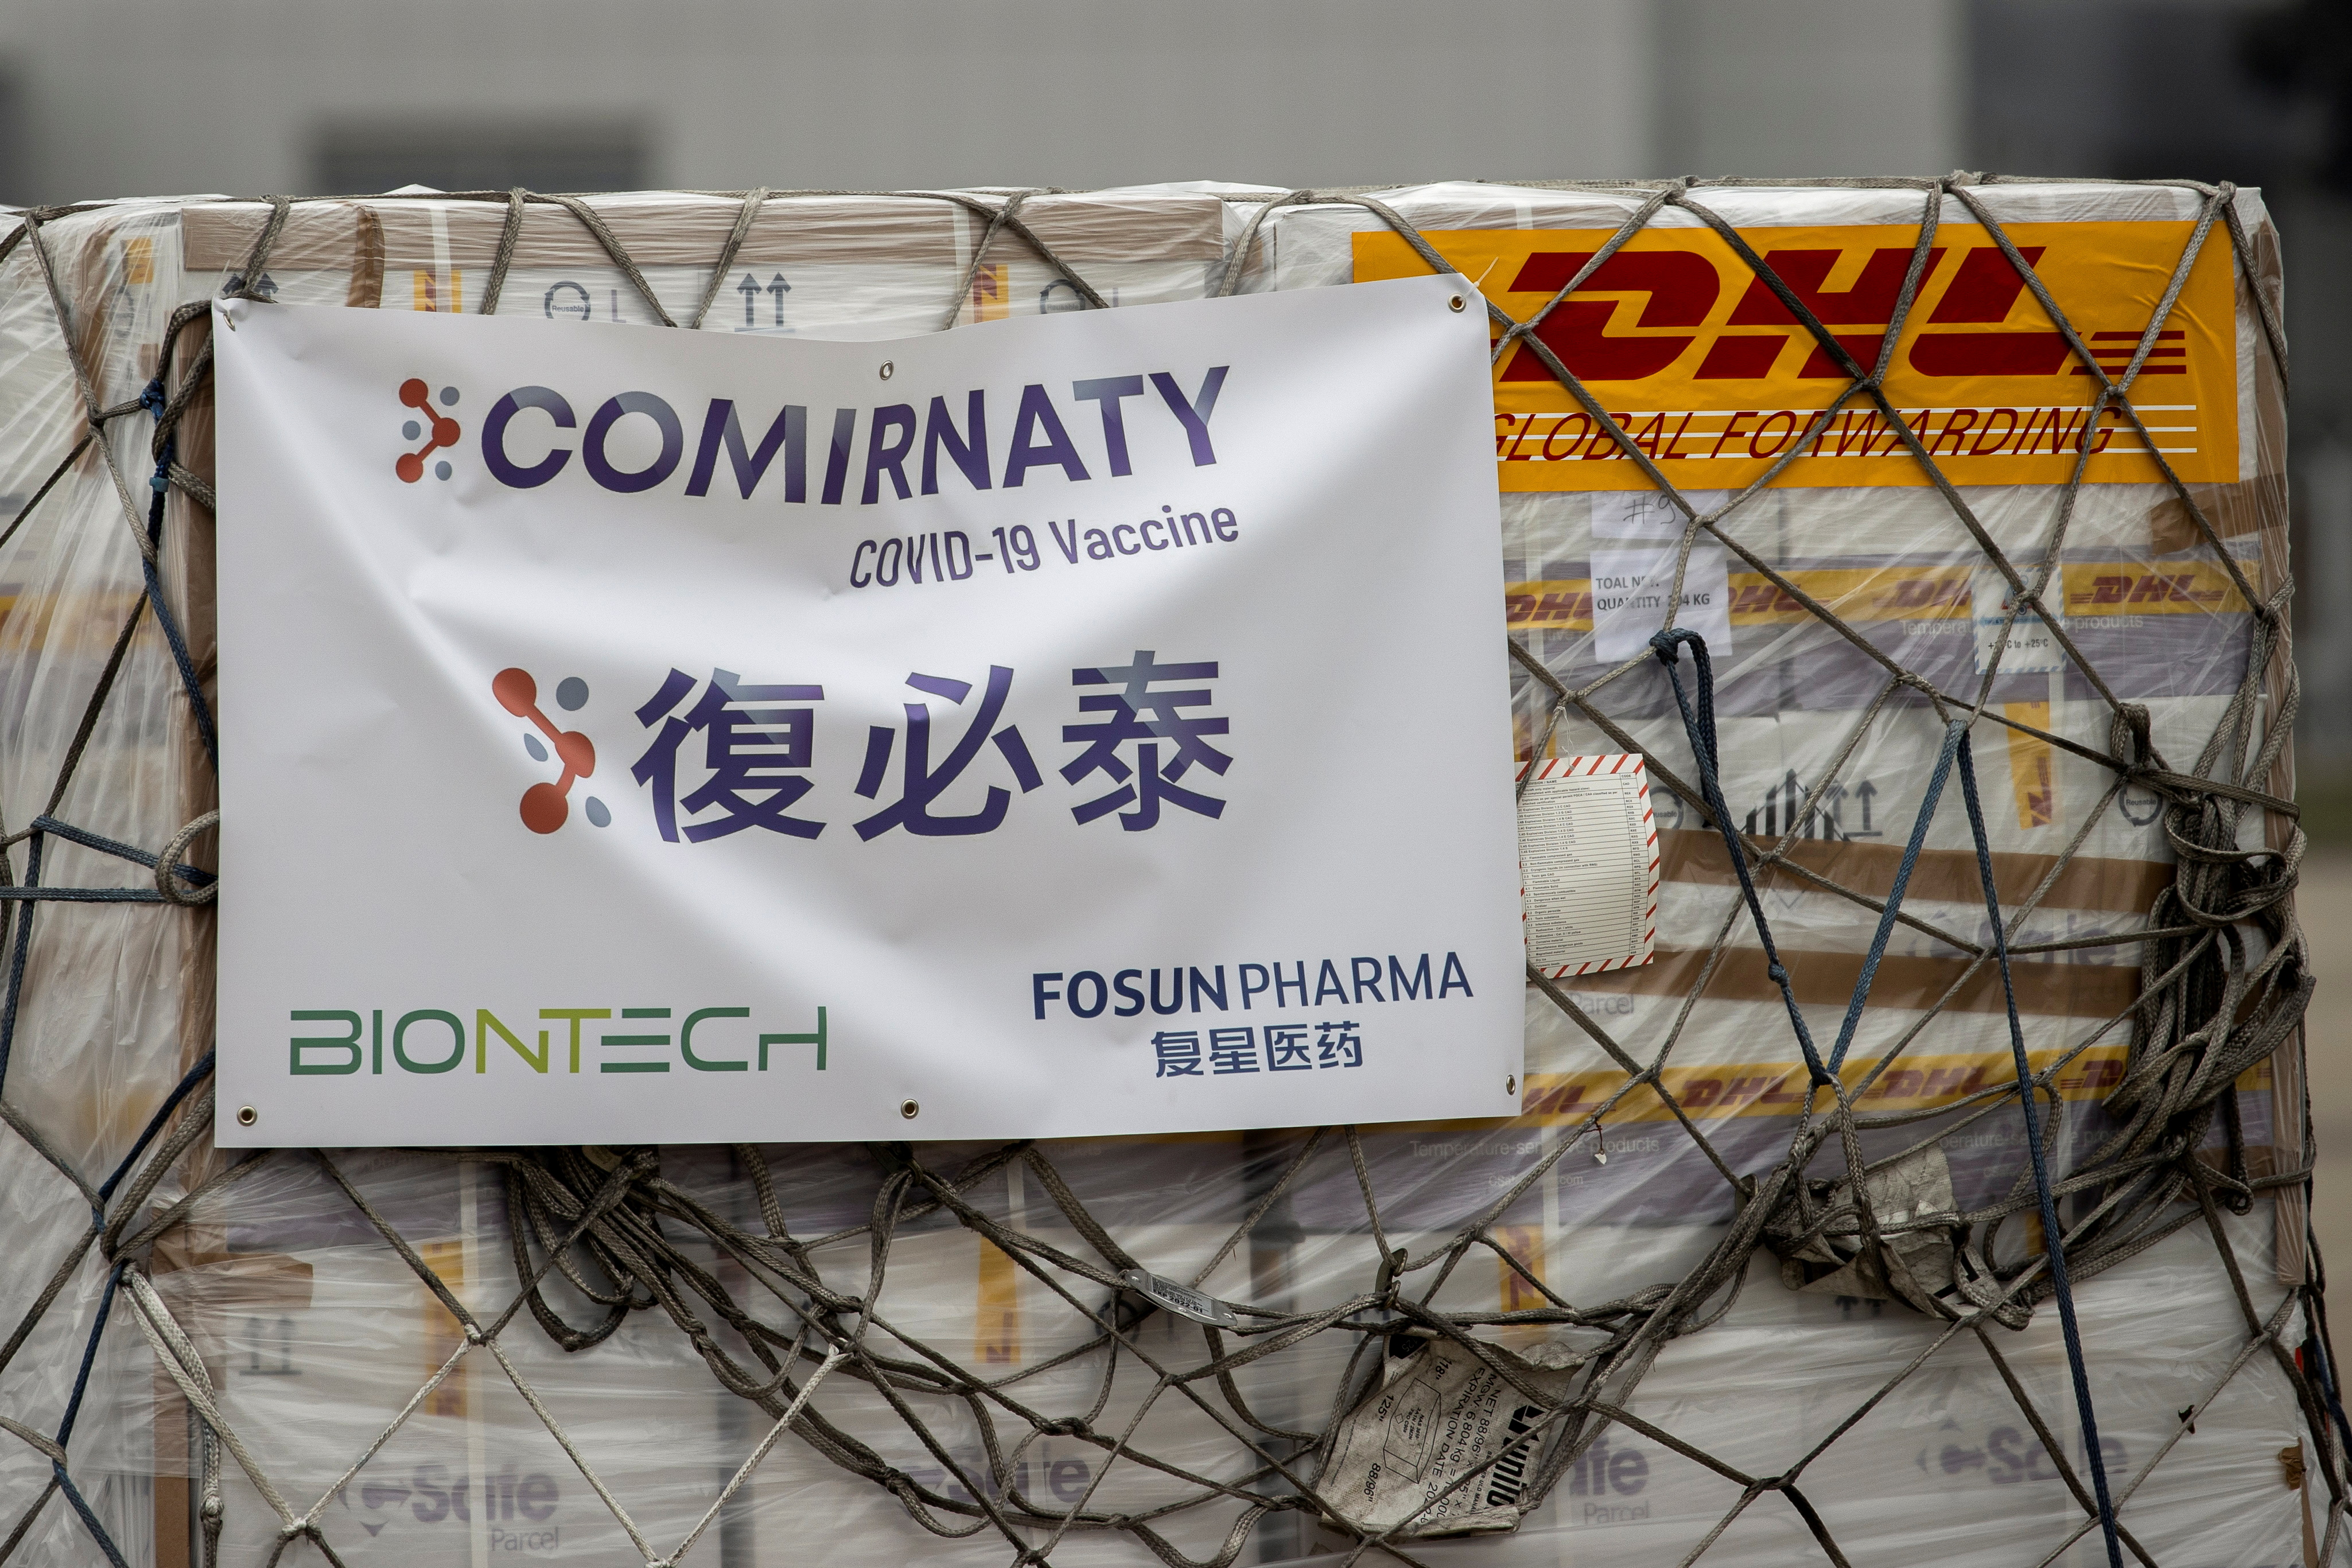 Fosun-BioNTech COVID-19 vaccines arrive at Hong Kong airport